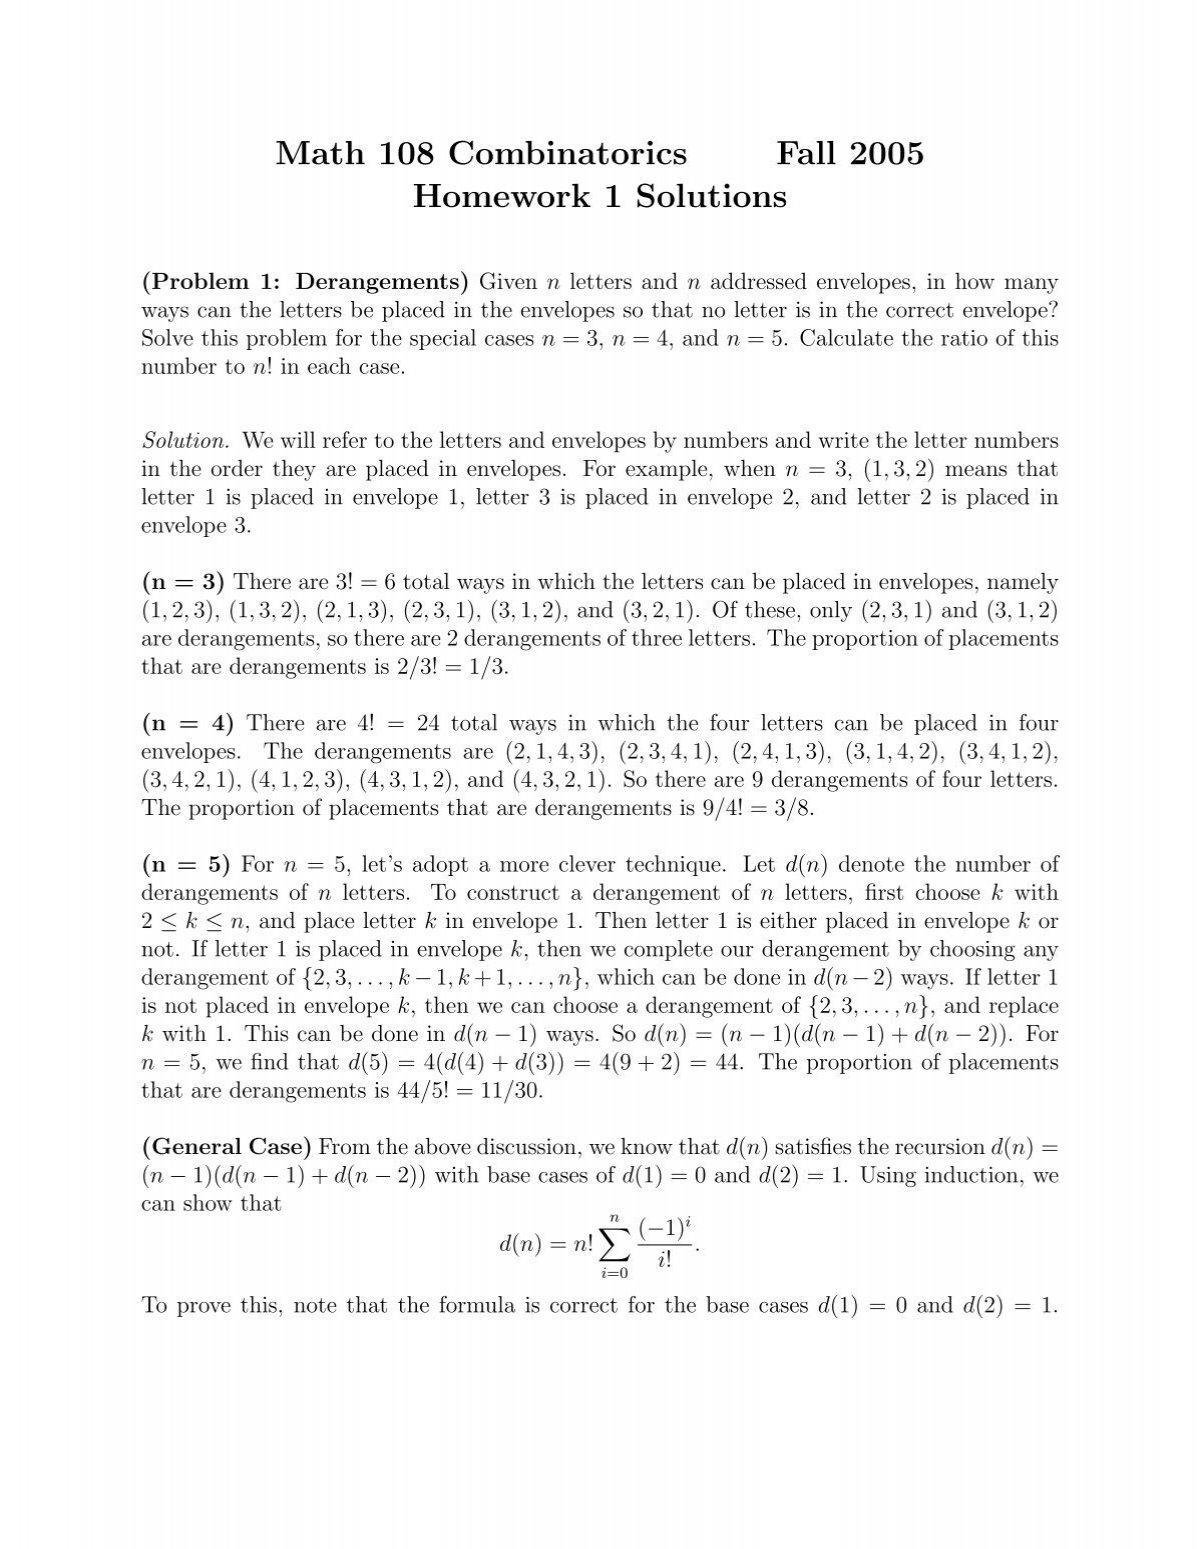 Math 108 Combinatorics Fall 05 Homework 1 Solutions